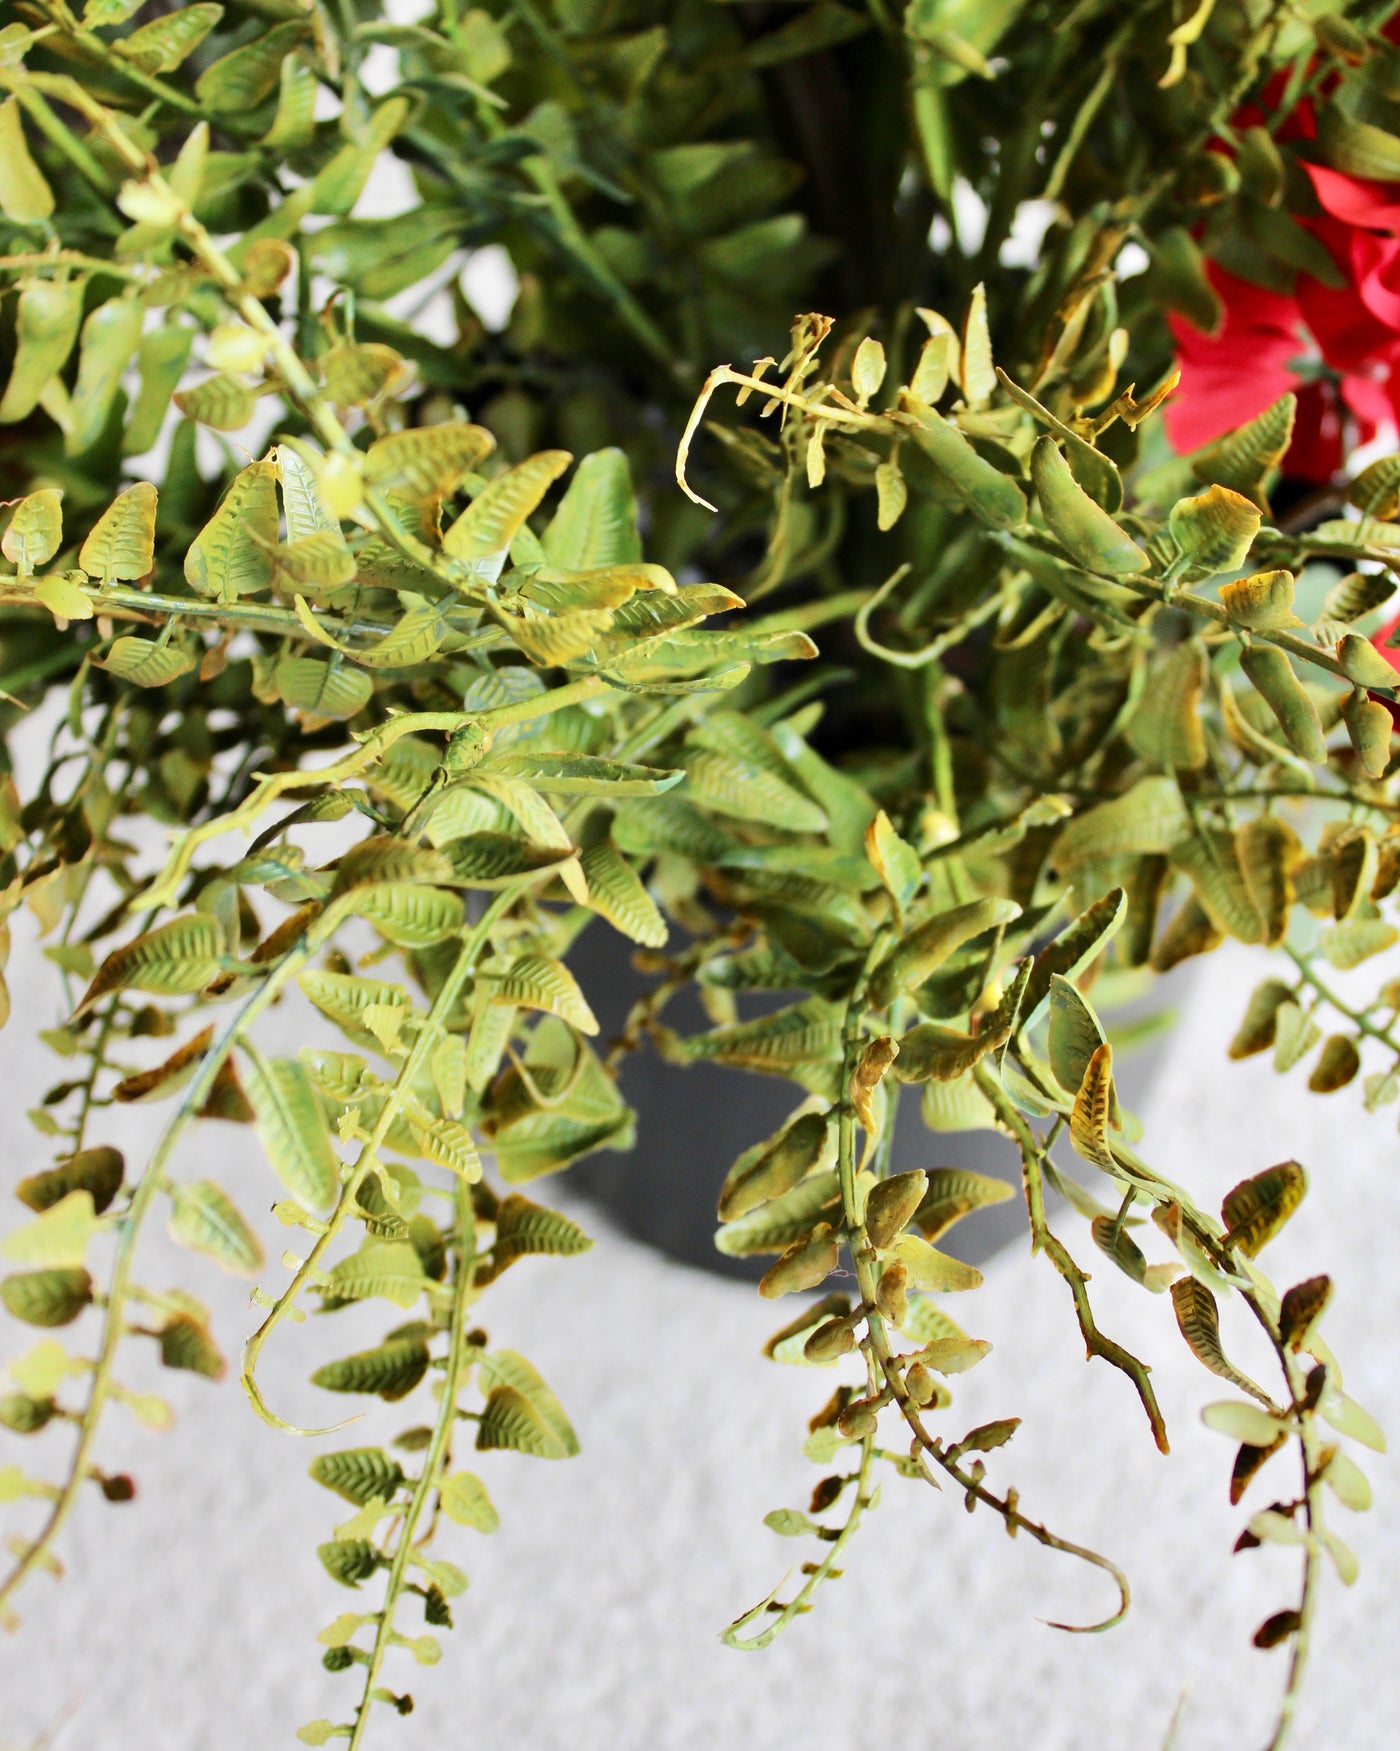 Red Geranium, Sweet Veronica & Fern “Drop-In” Insert